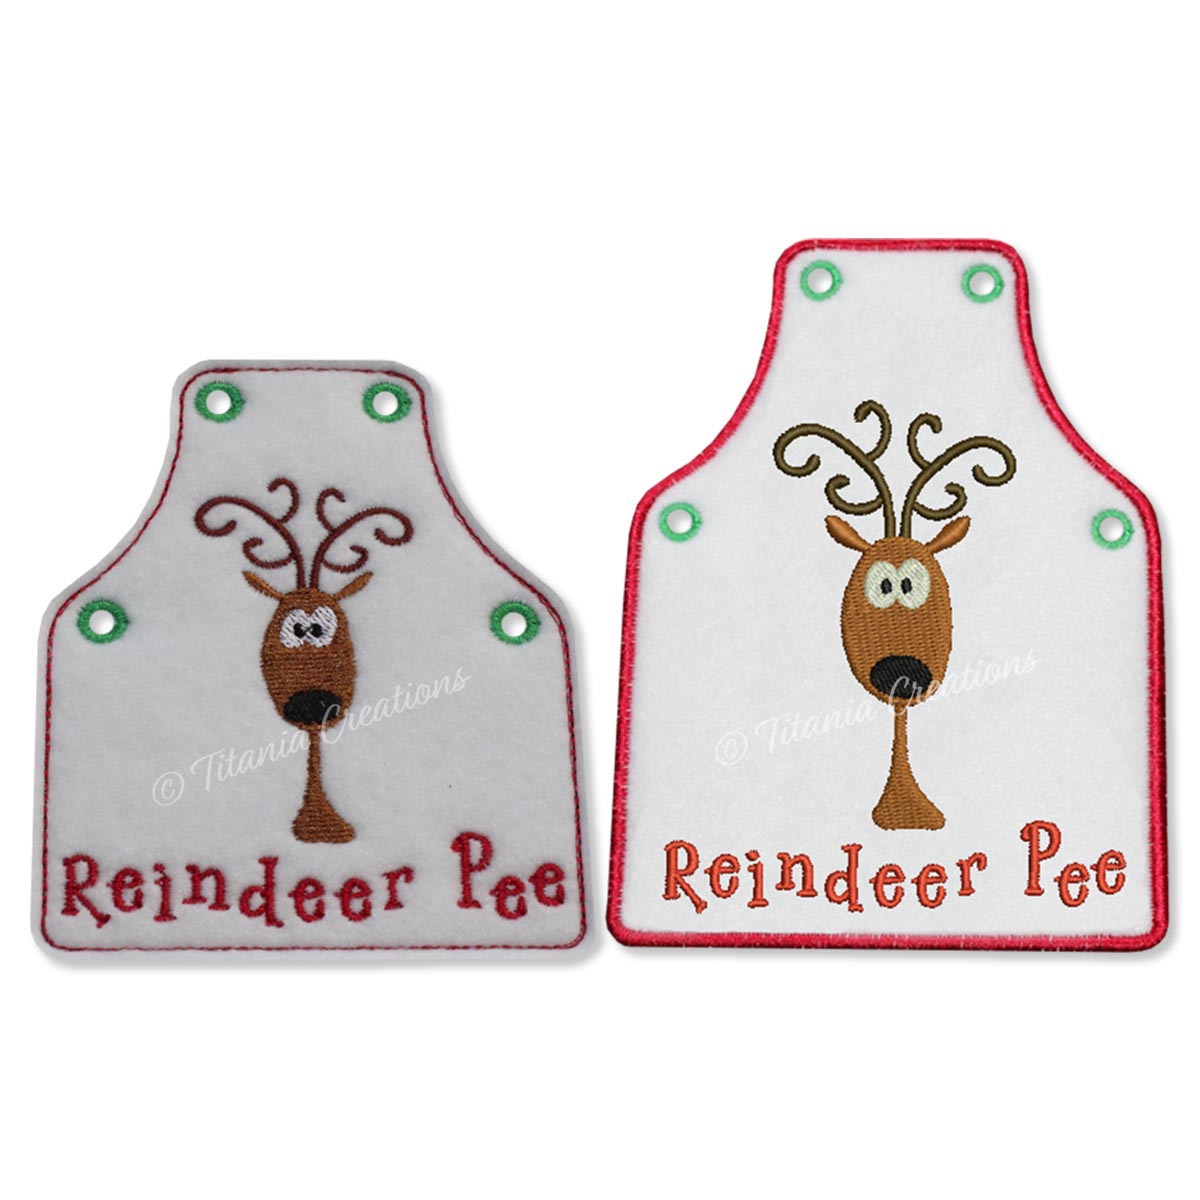 Reindeer Pee Bottle Apron 4x4 5x7